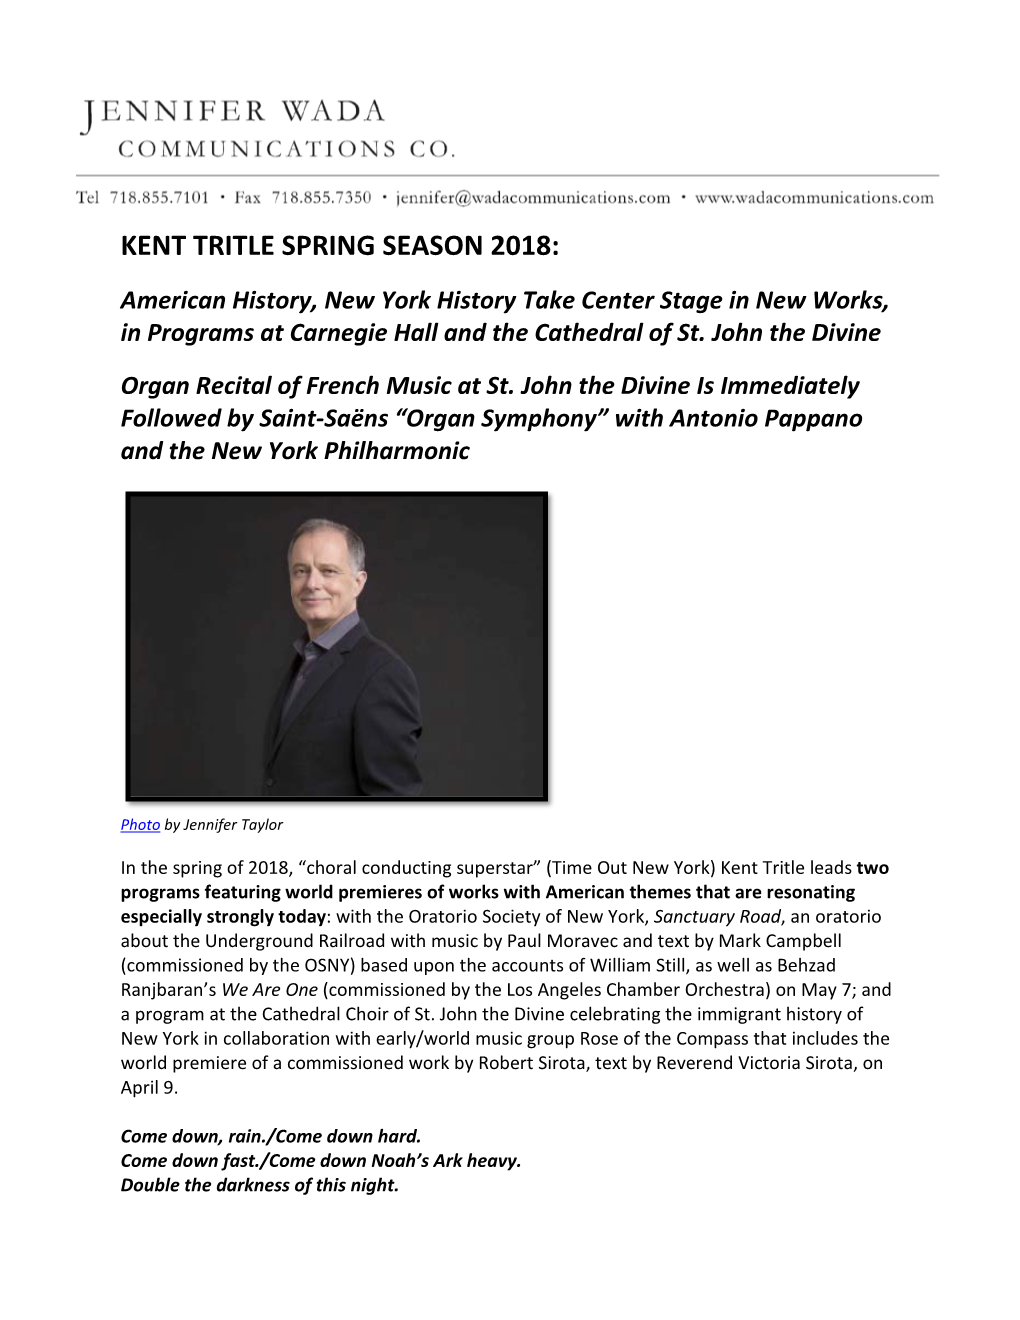 Kent Tritle Spring Season 2018